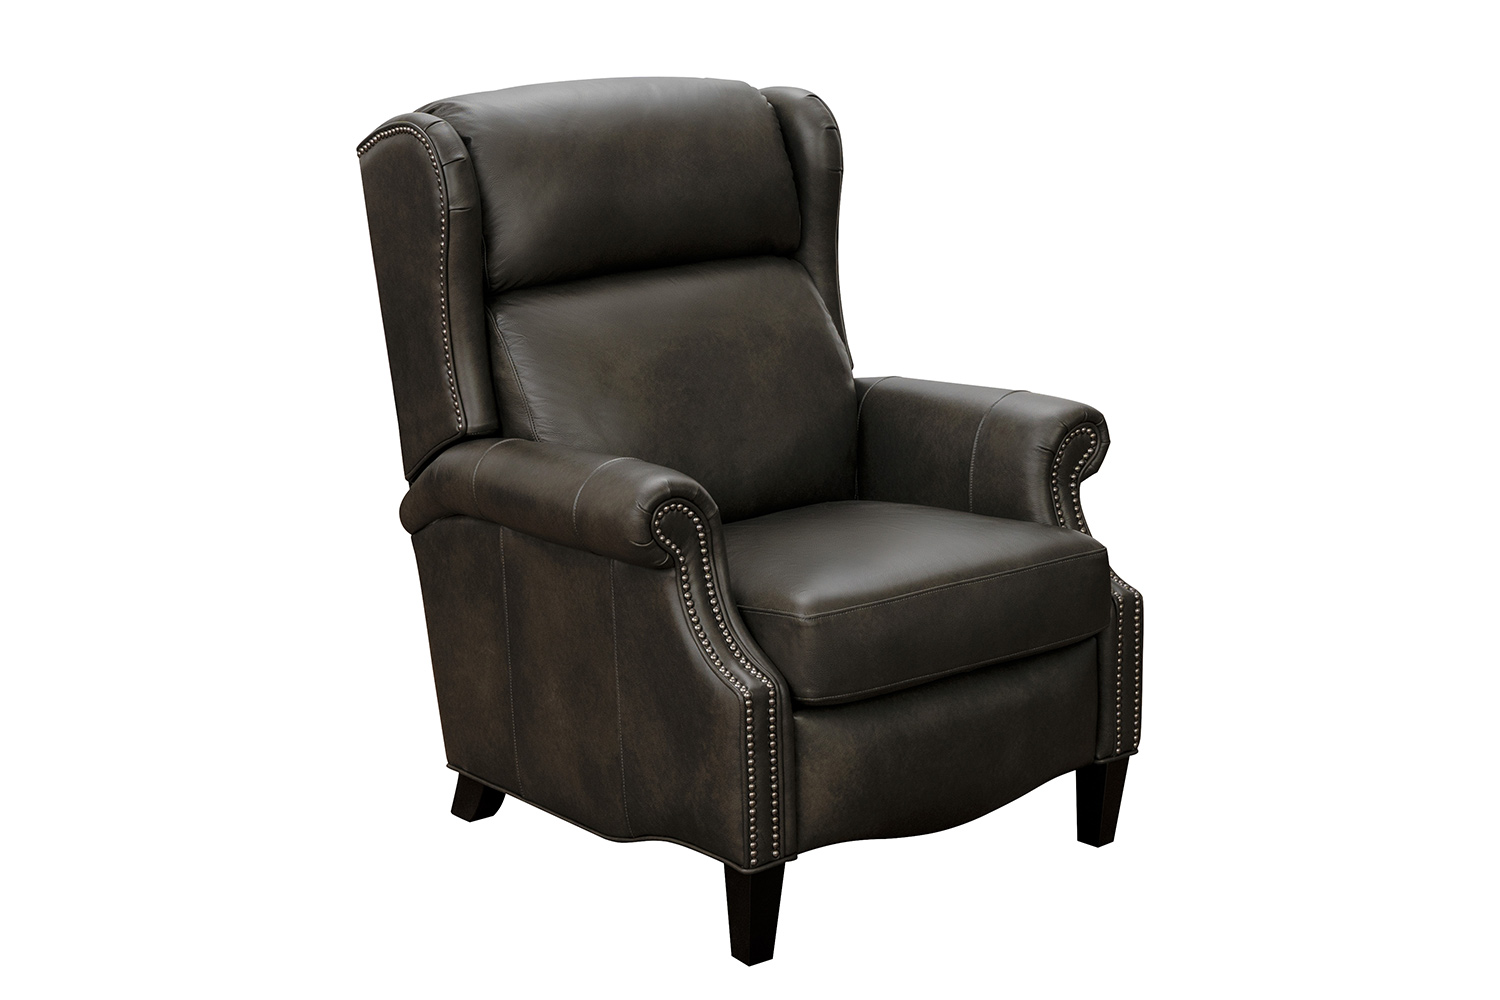 Barcalounger Philadelphia Recliner Chair - Ashford Graphite/All Leather